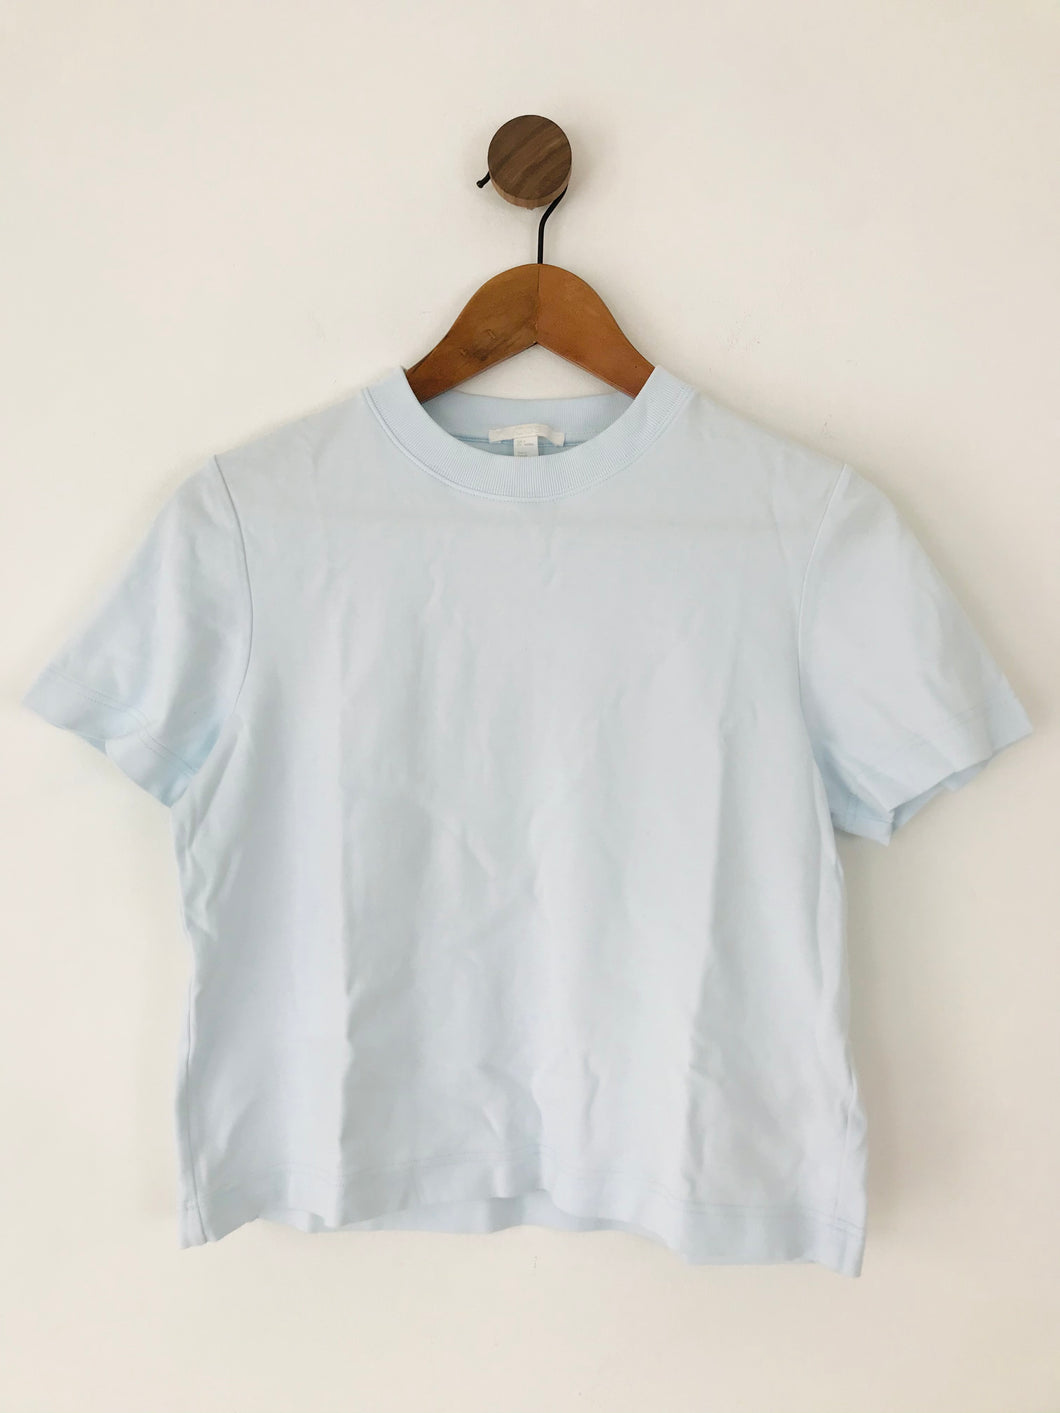 Cos Women’s Slim Fit Cropped T-shirt | UK8-10 S | Blue